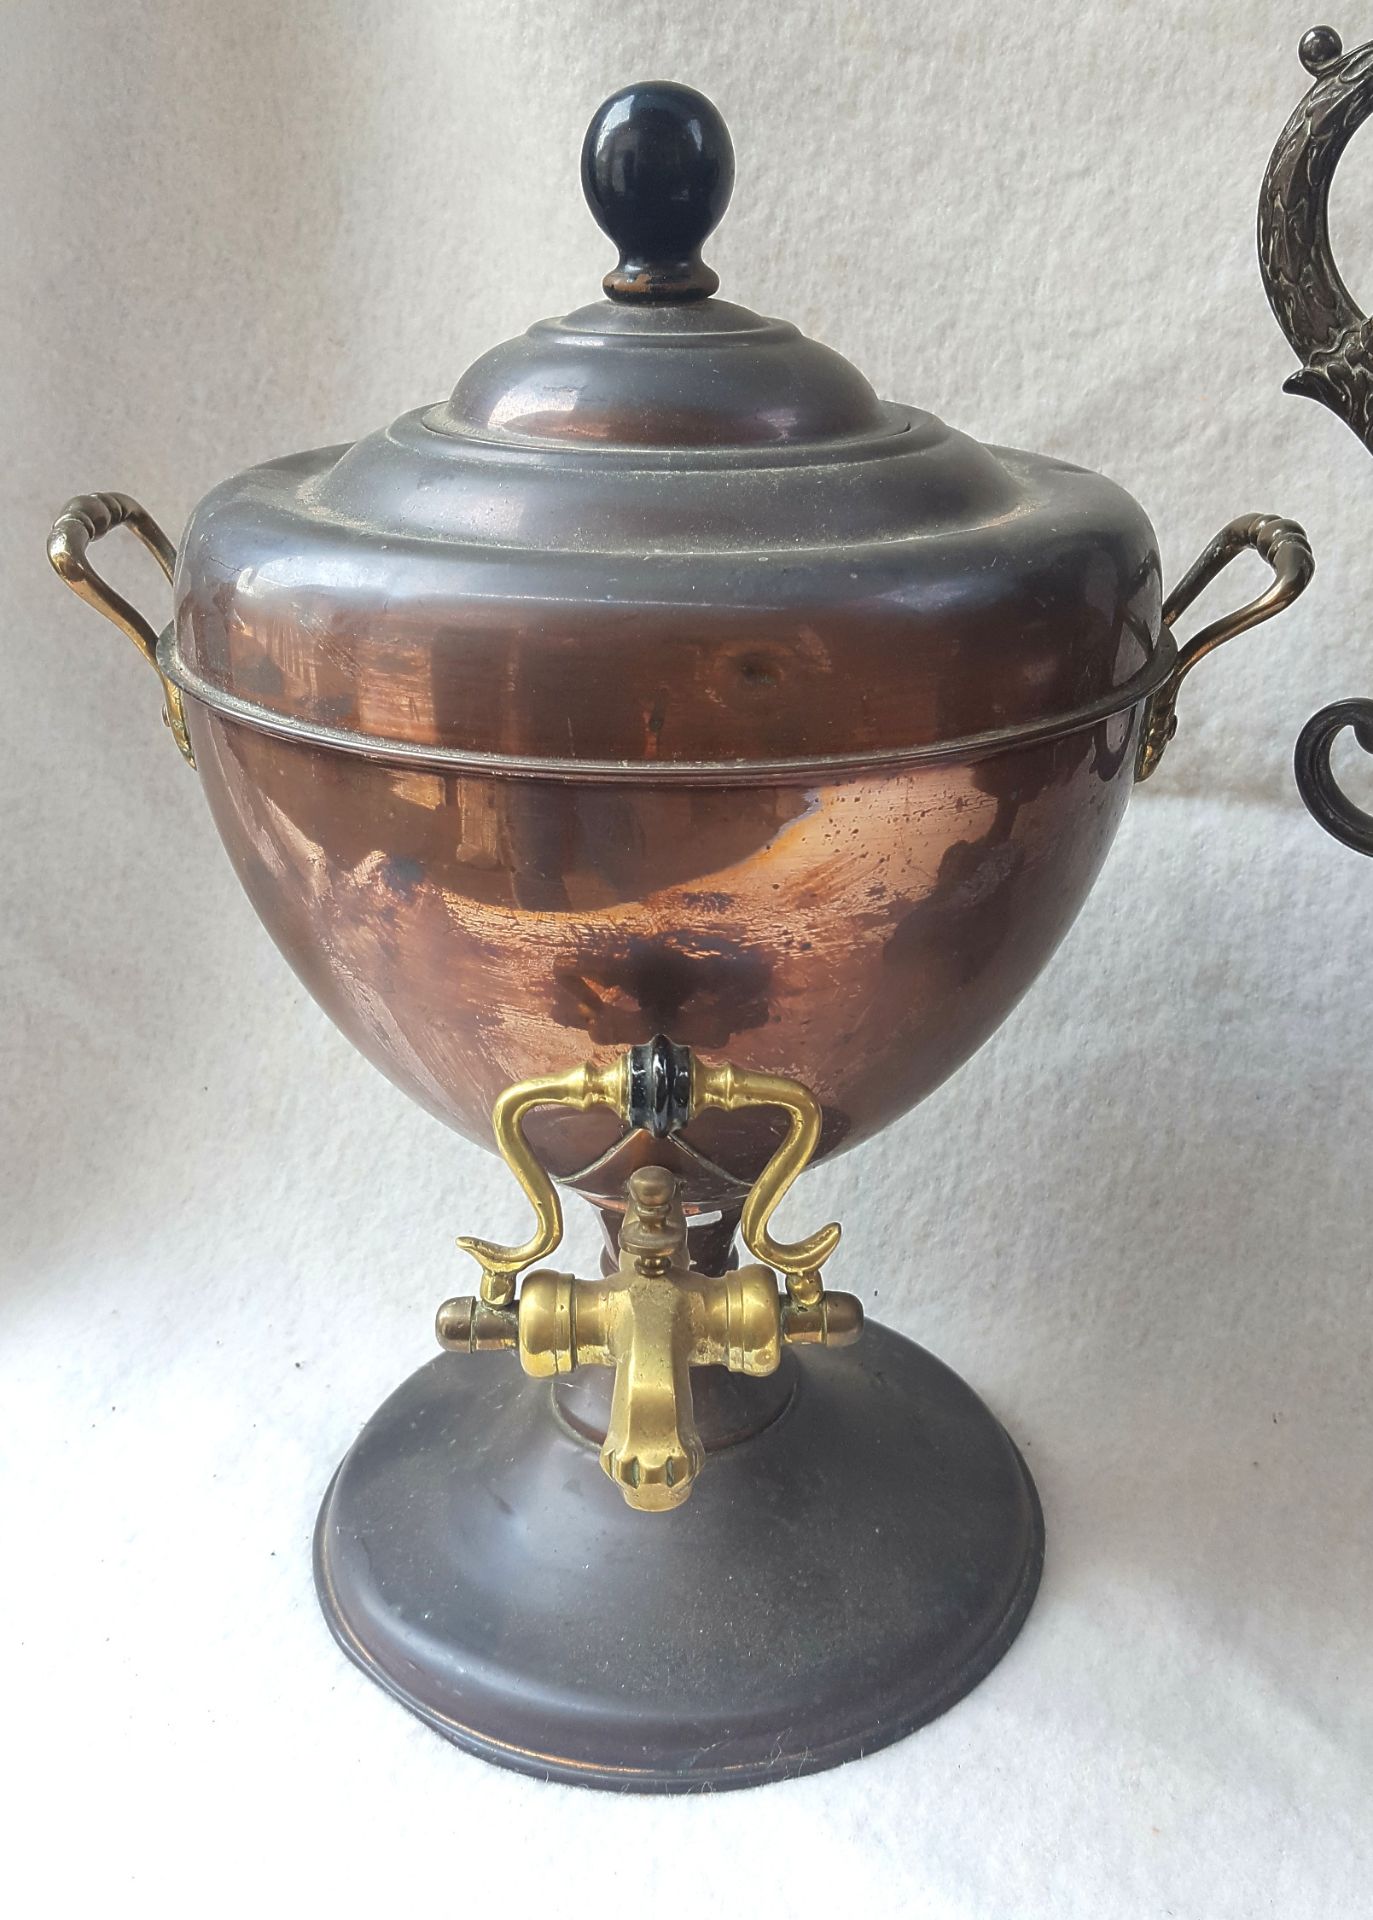 2 Antique Copper & Brass Samovar's - Image 3 of 3